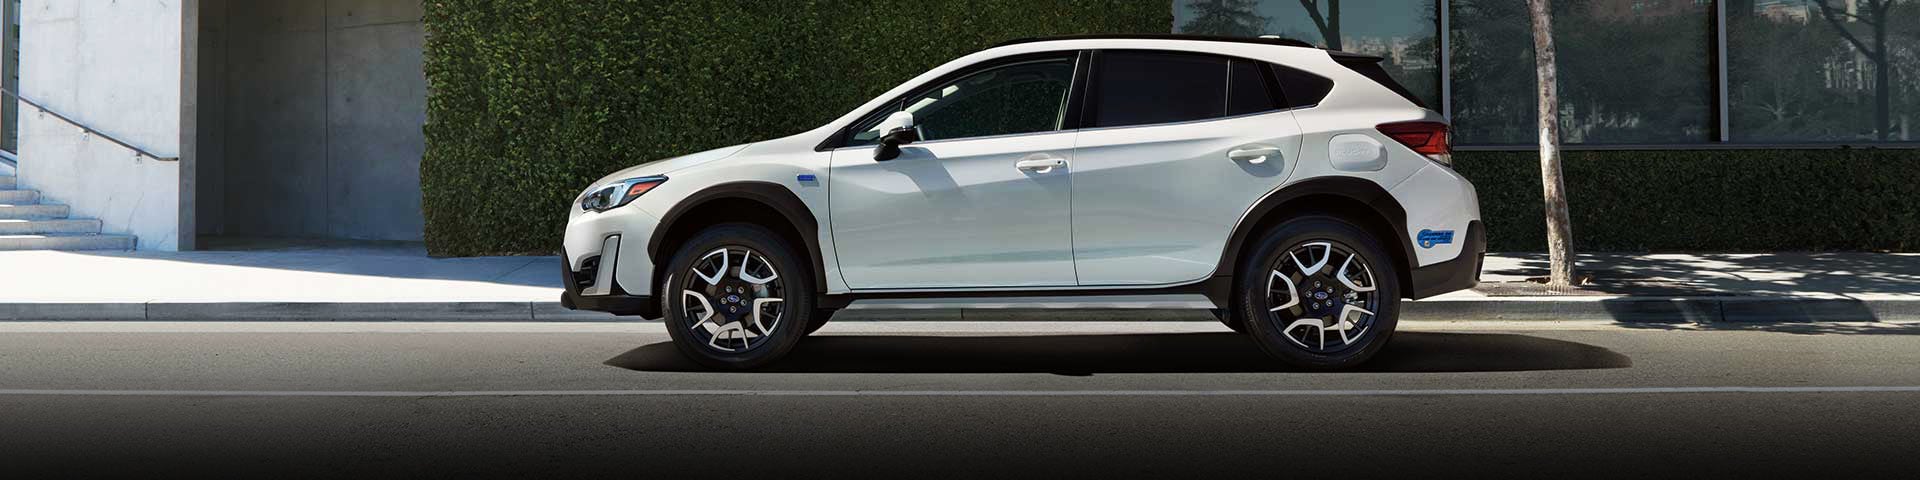 The side profile of a white Subaru Crosstrek Hybrid | Vann York Subaru in Asheboro NC